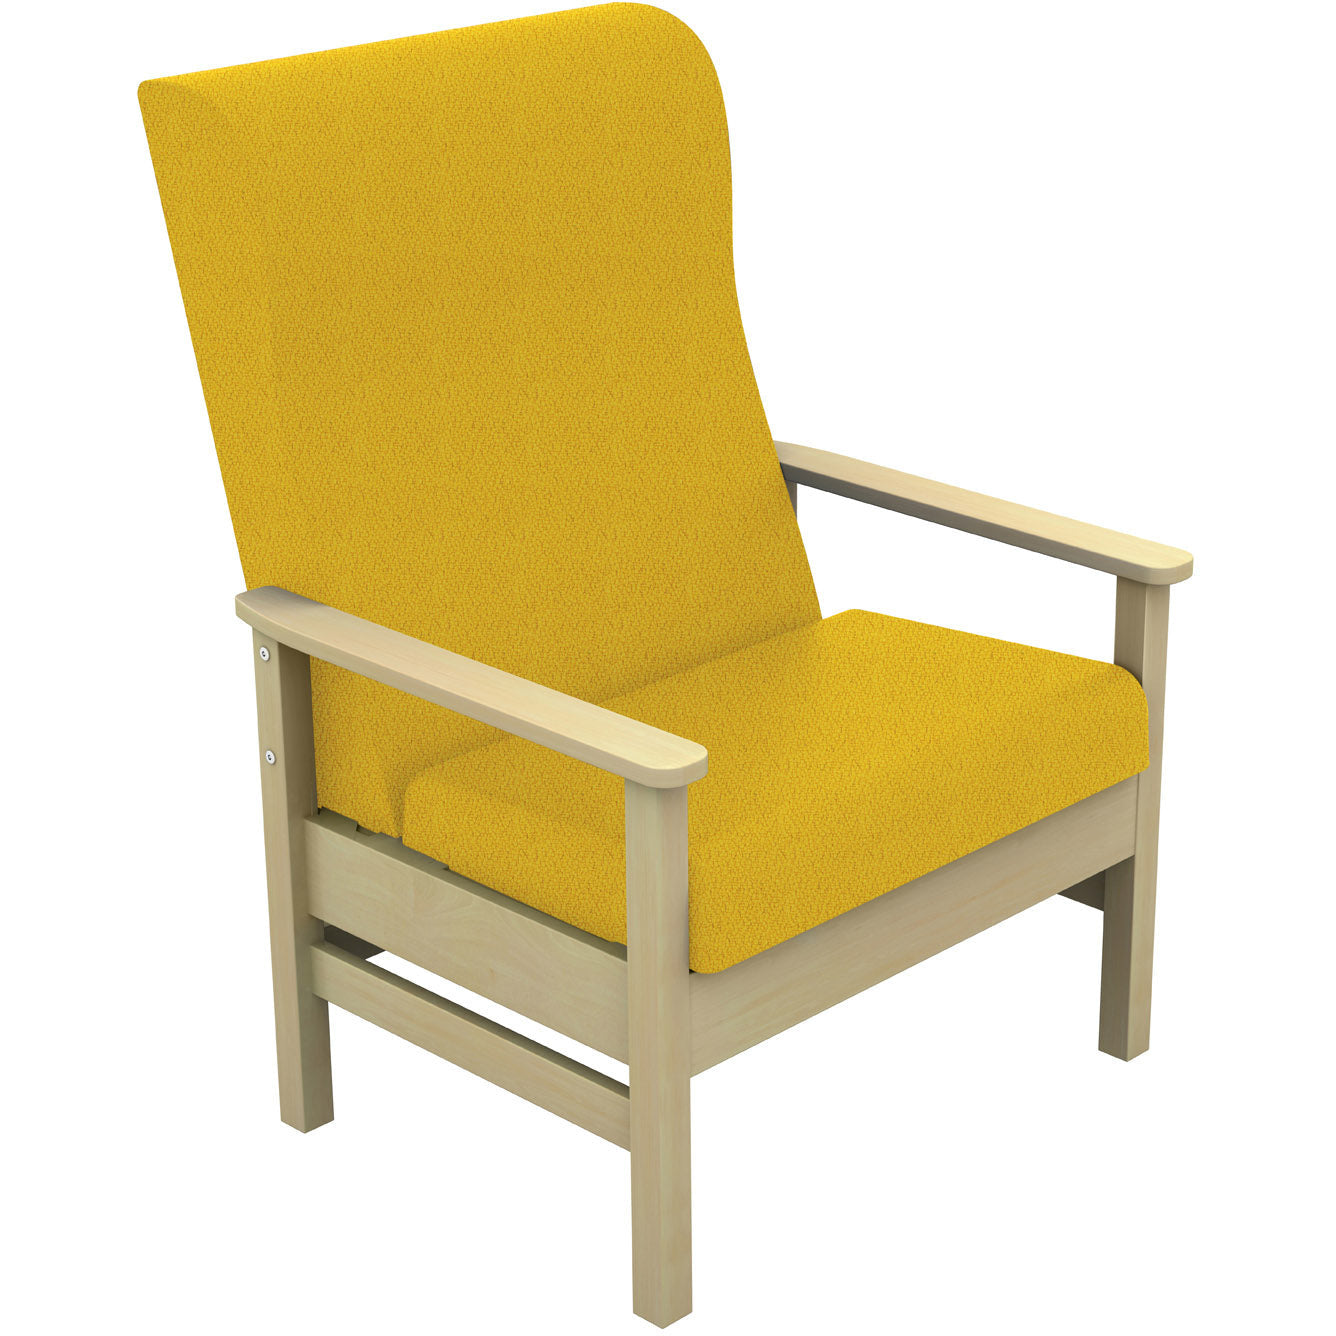 Sunflower Atlas Bariatric High-Back Patient Chair - Intervene Upholstery